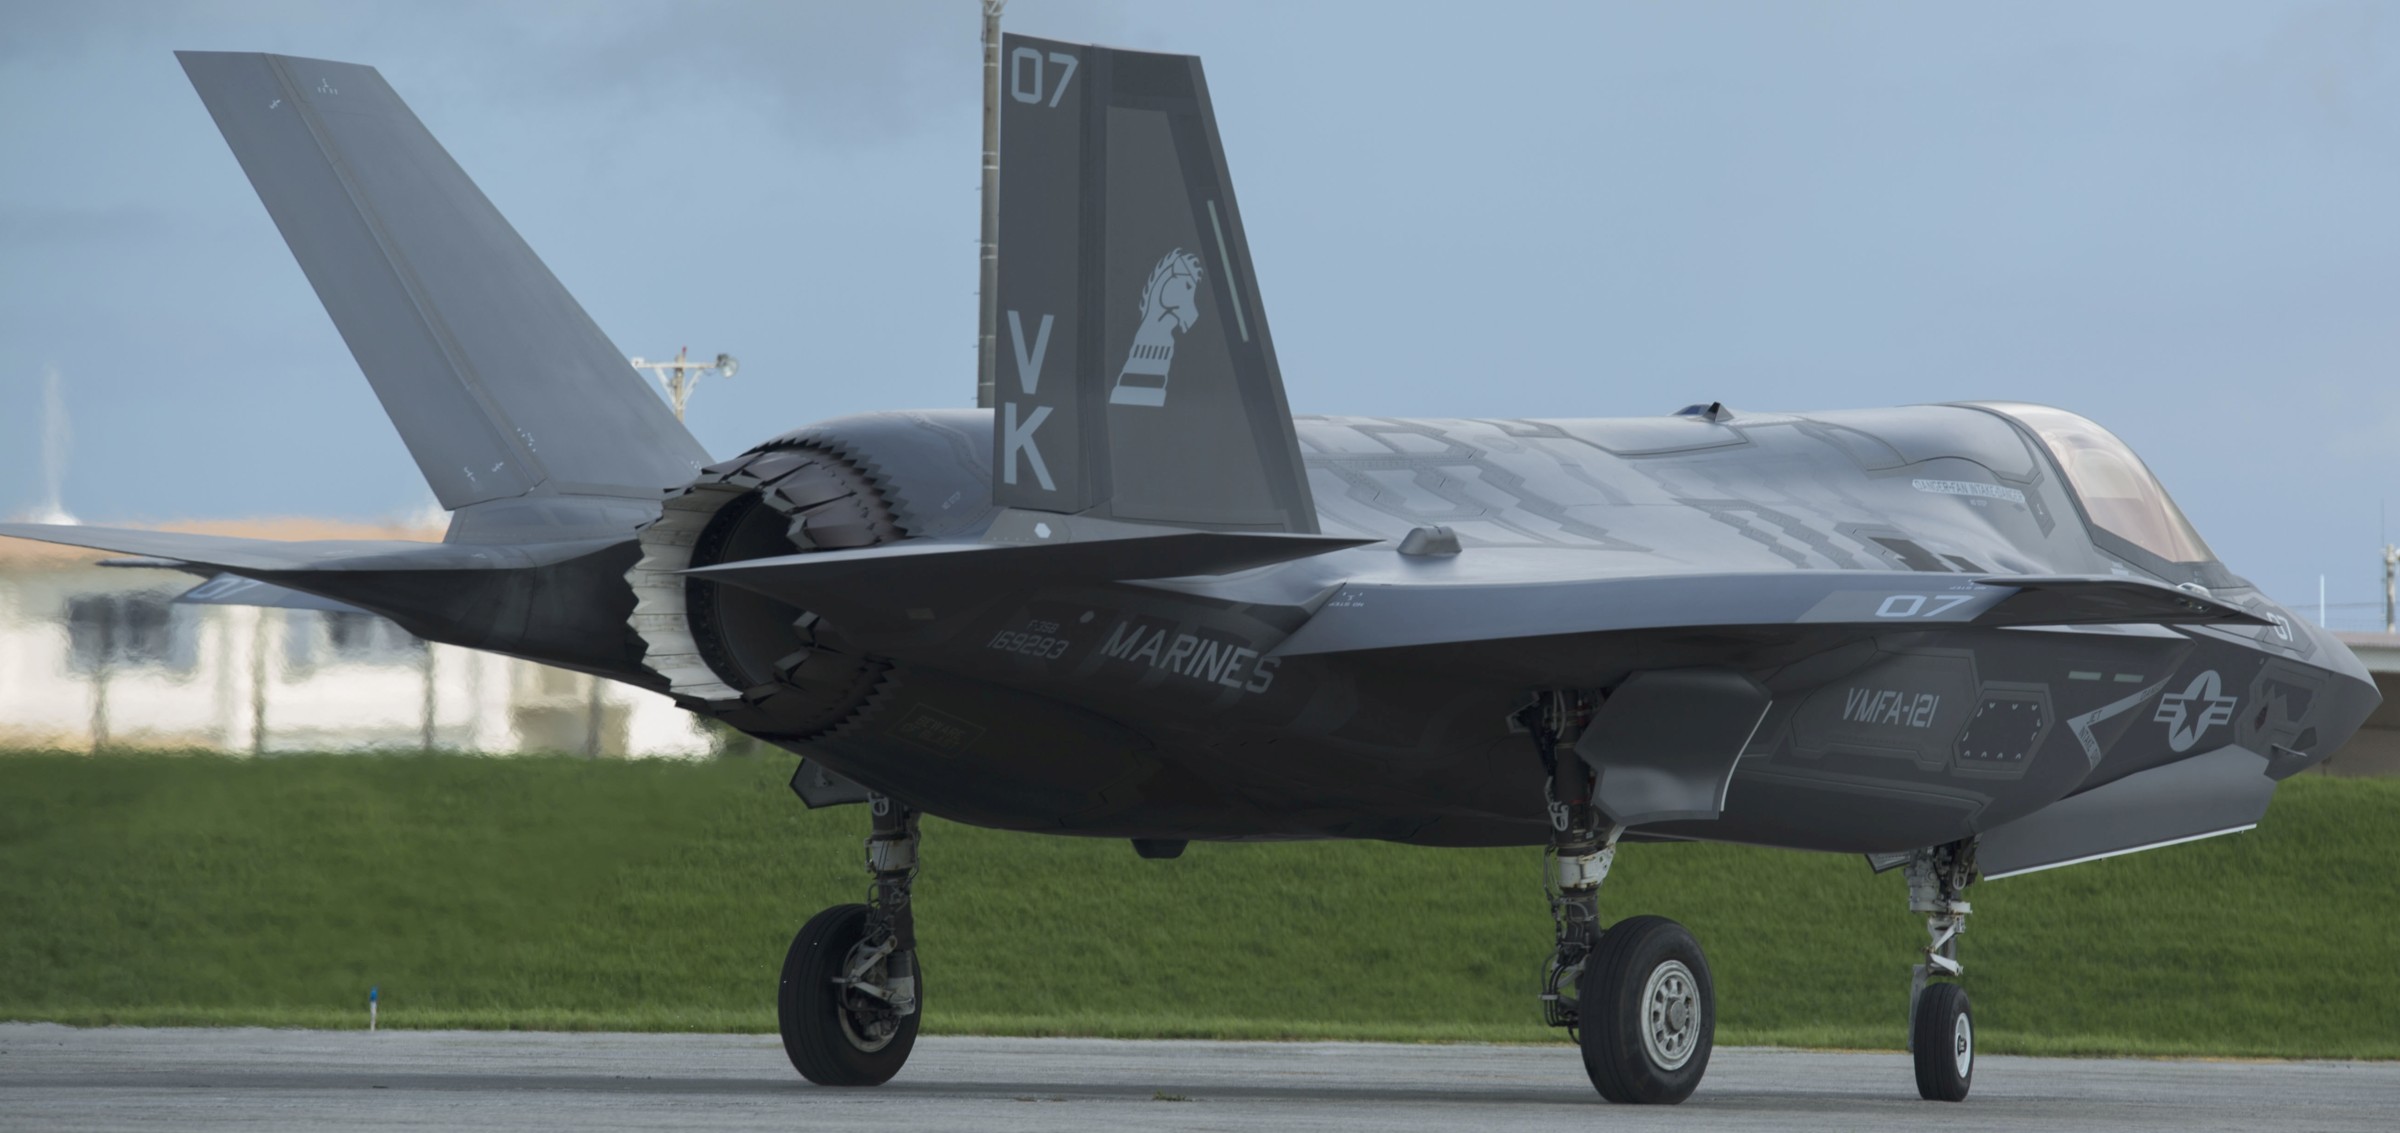 vmfa-121 green knights marine fighter attack squadron f-35b lightning ii 132 kadena air base okinawa